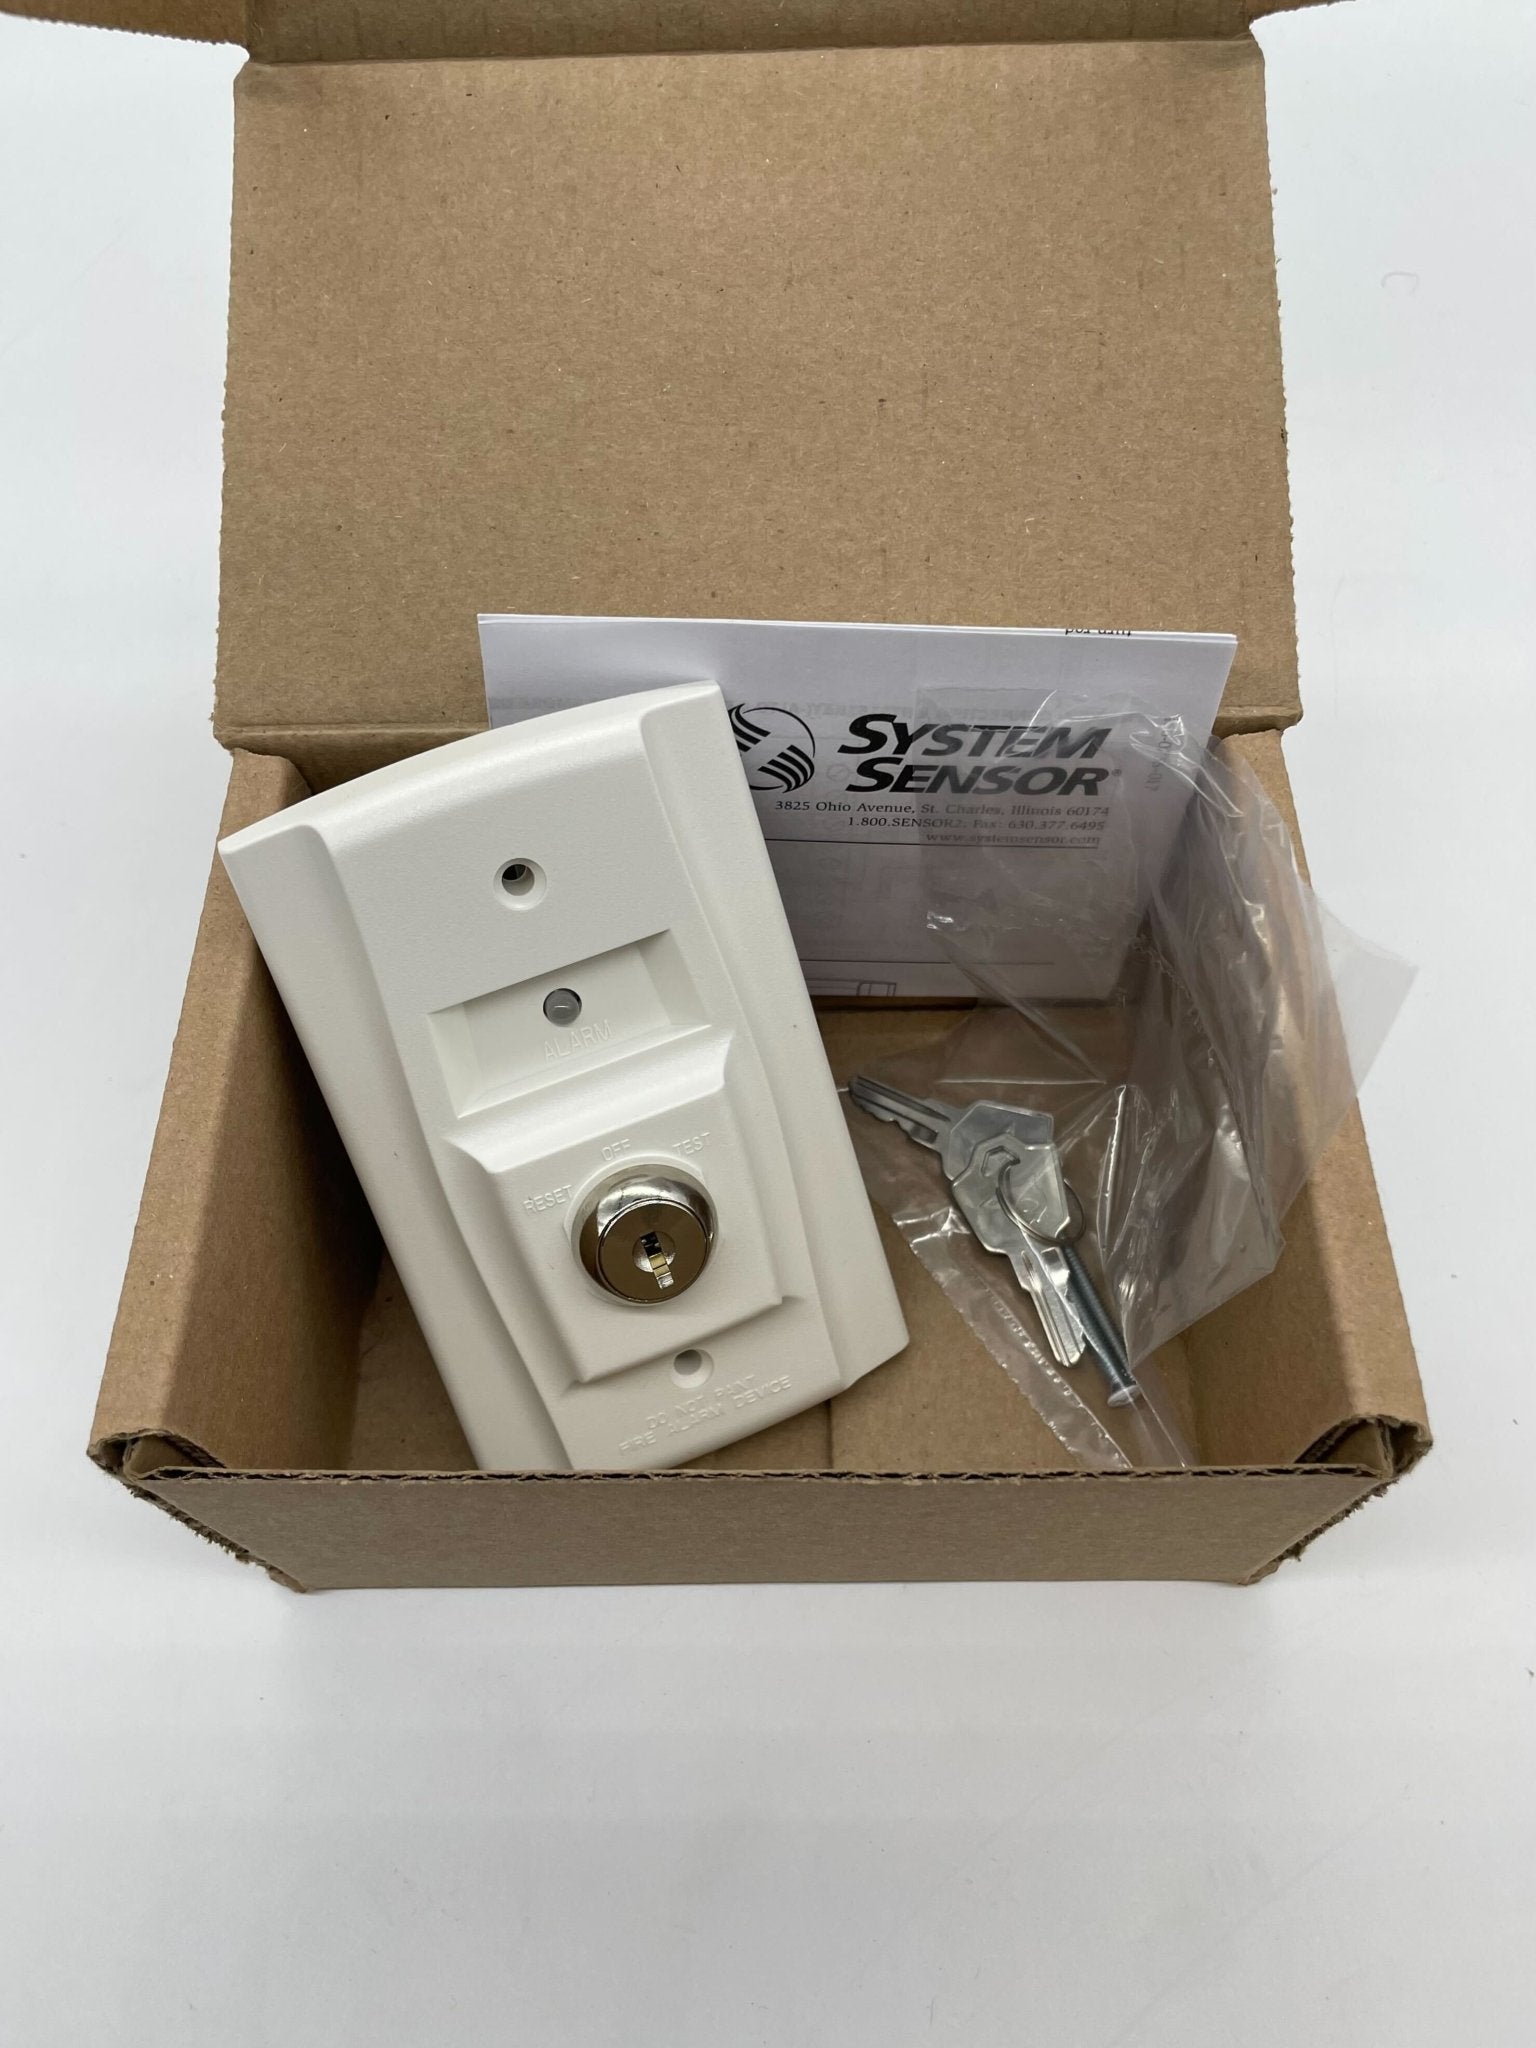 System Sensor RTS151KEY - The Fire Alarm Supplier